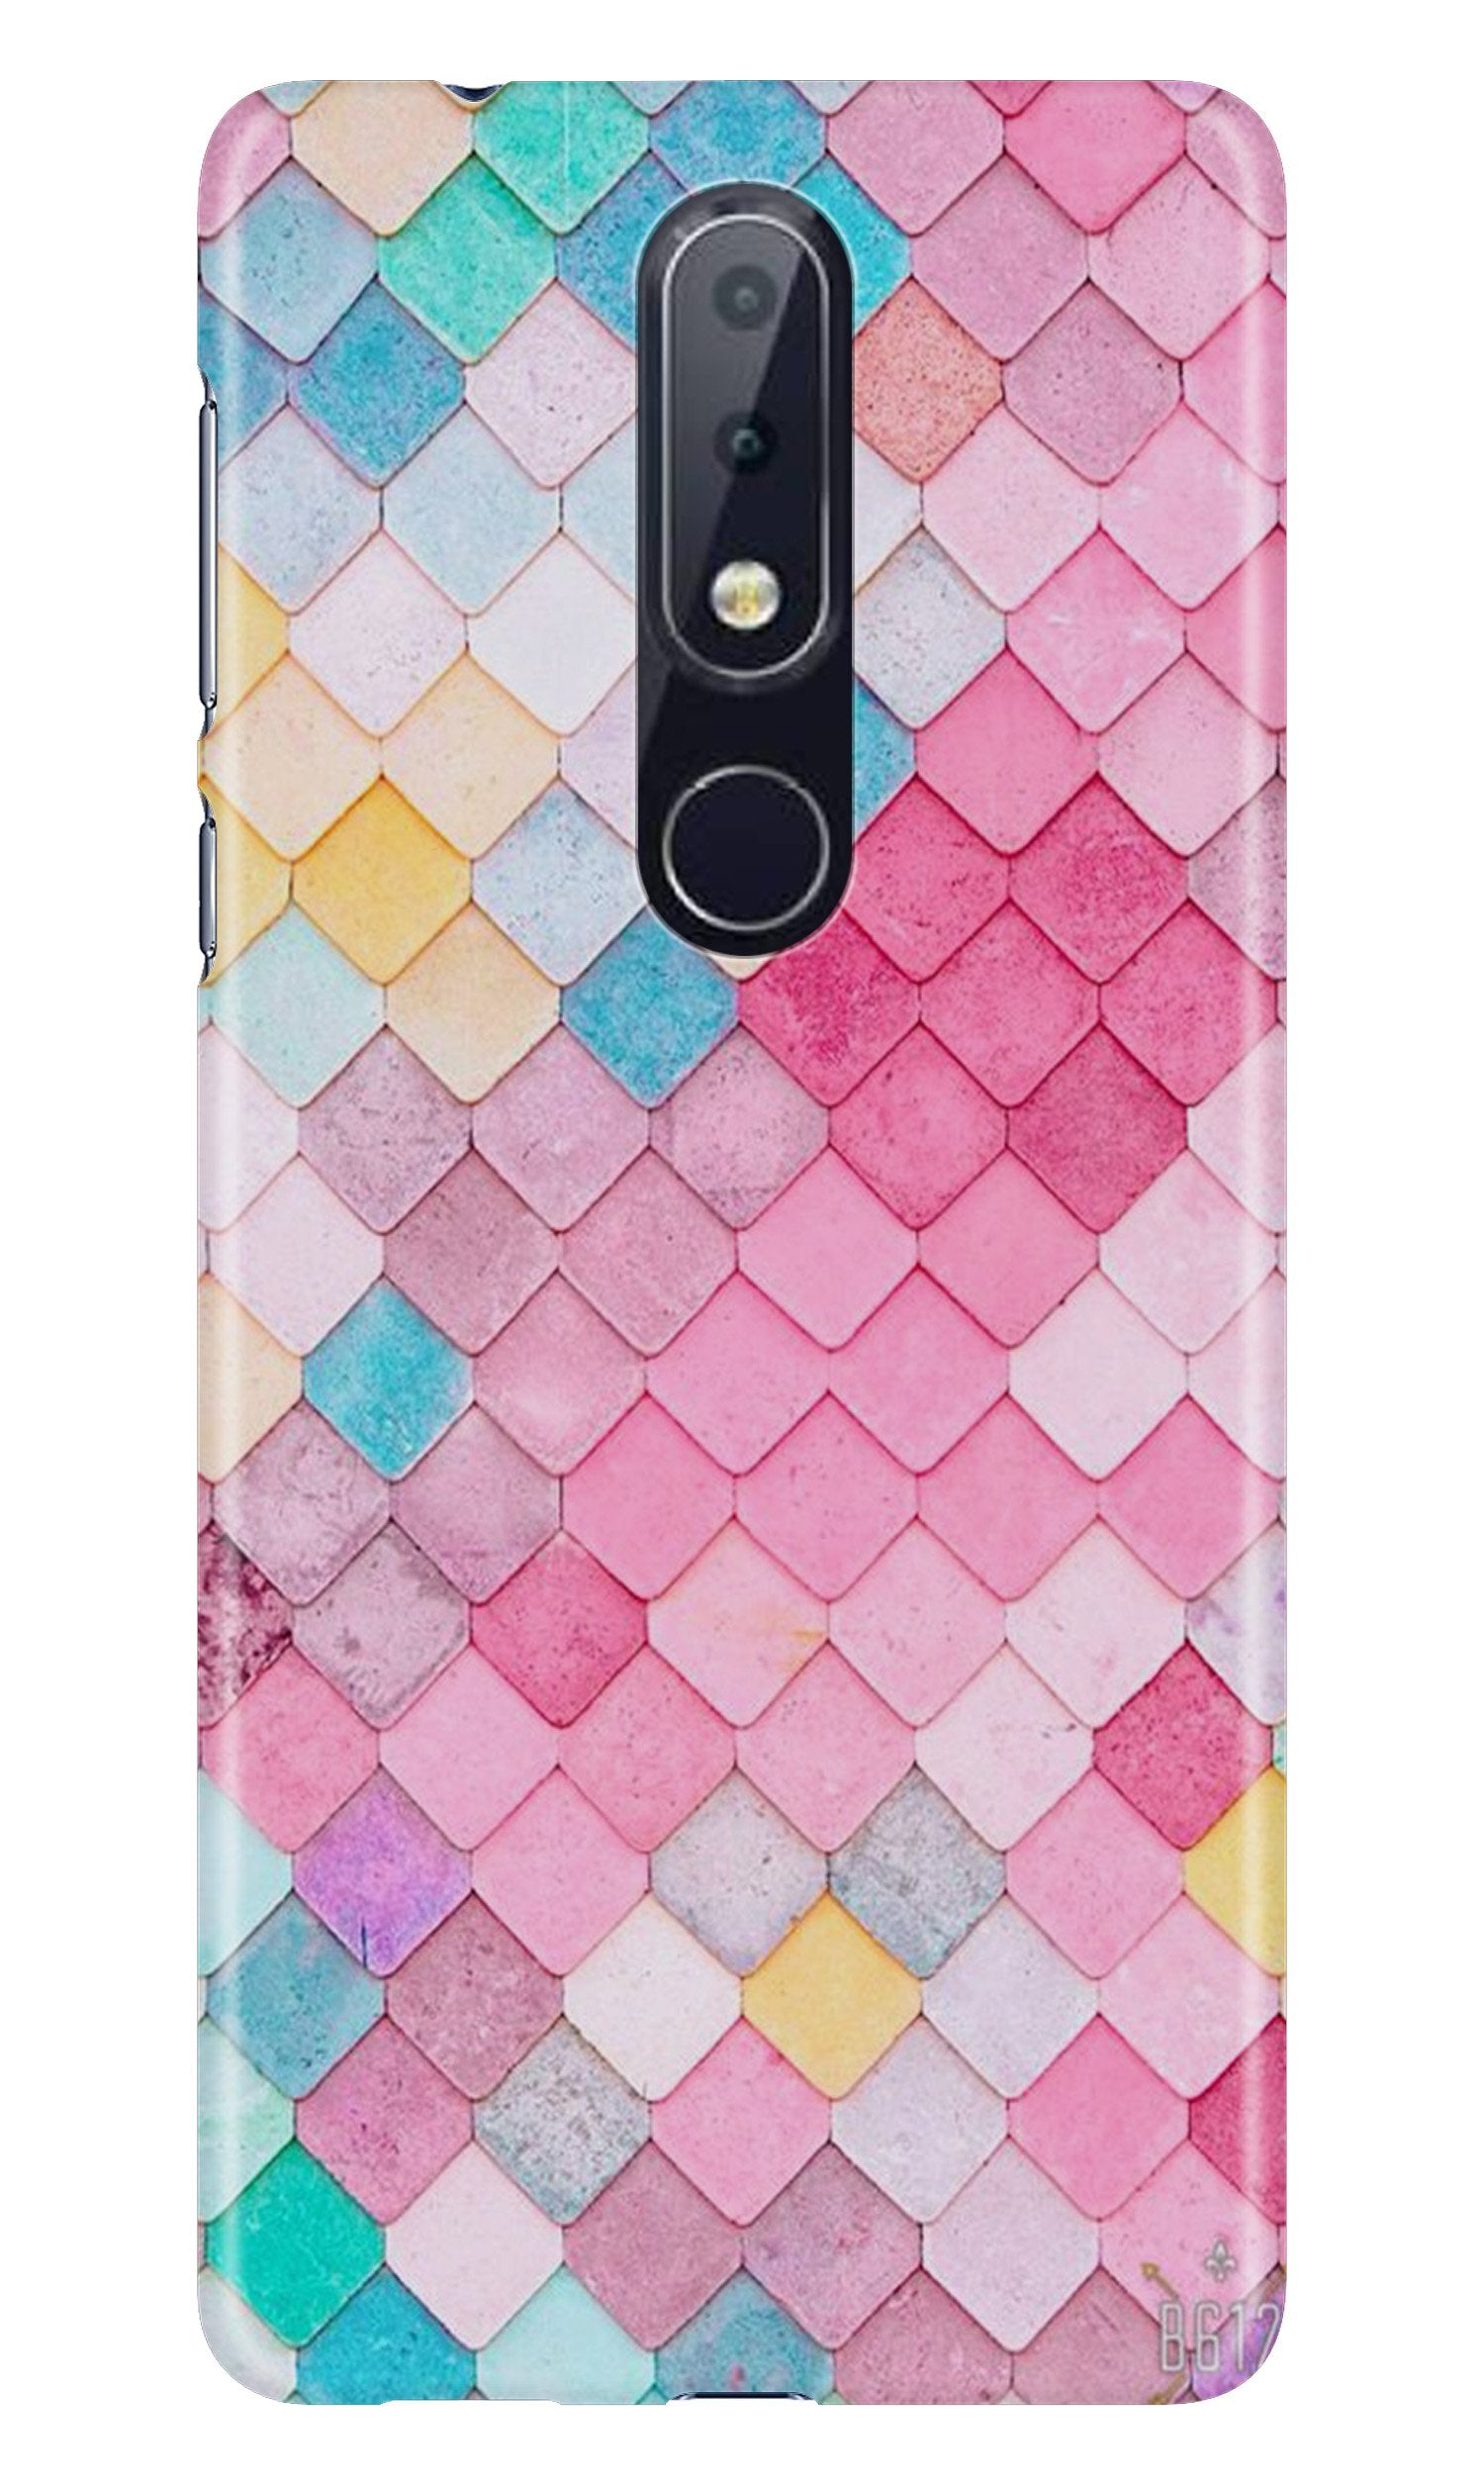 Pink Pattern Case for Nokia 4.2 (Design No. 215)